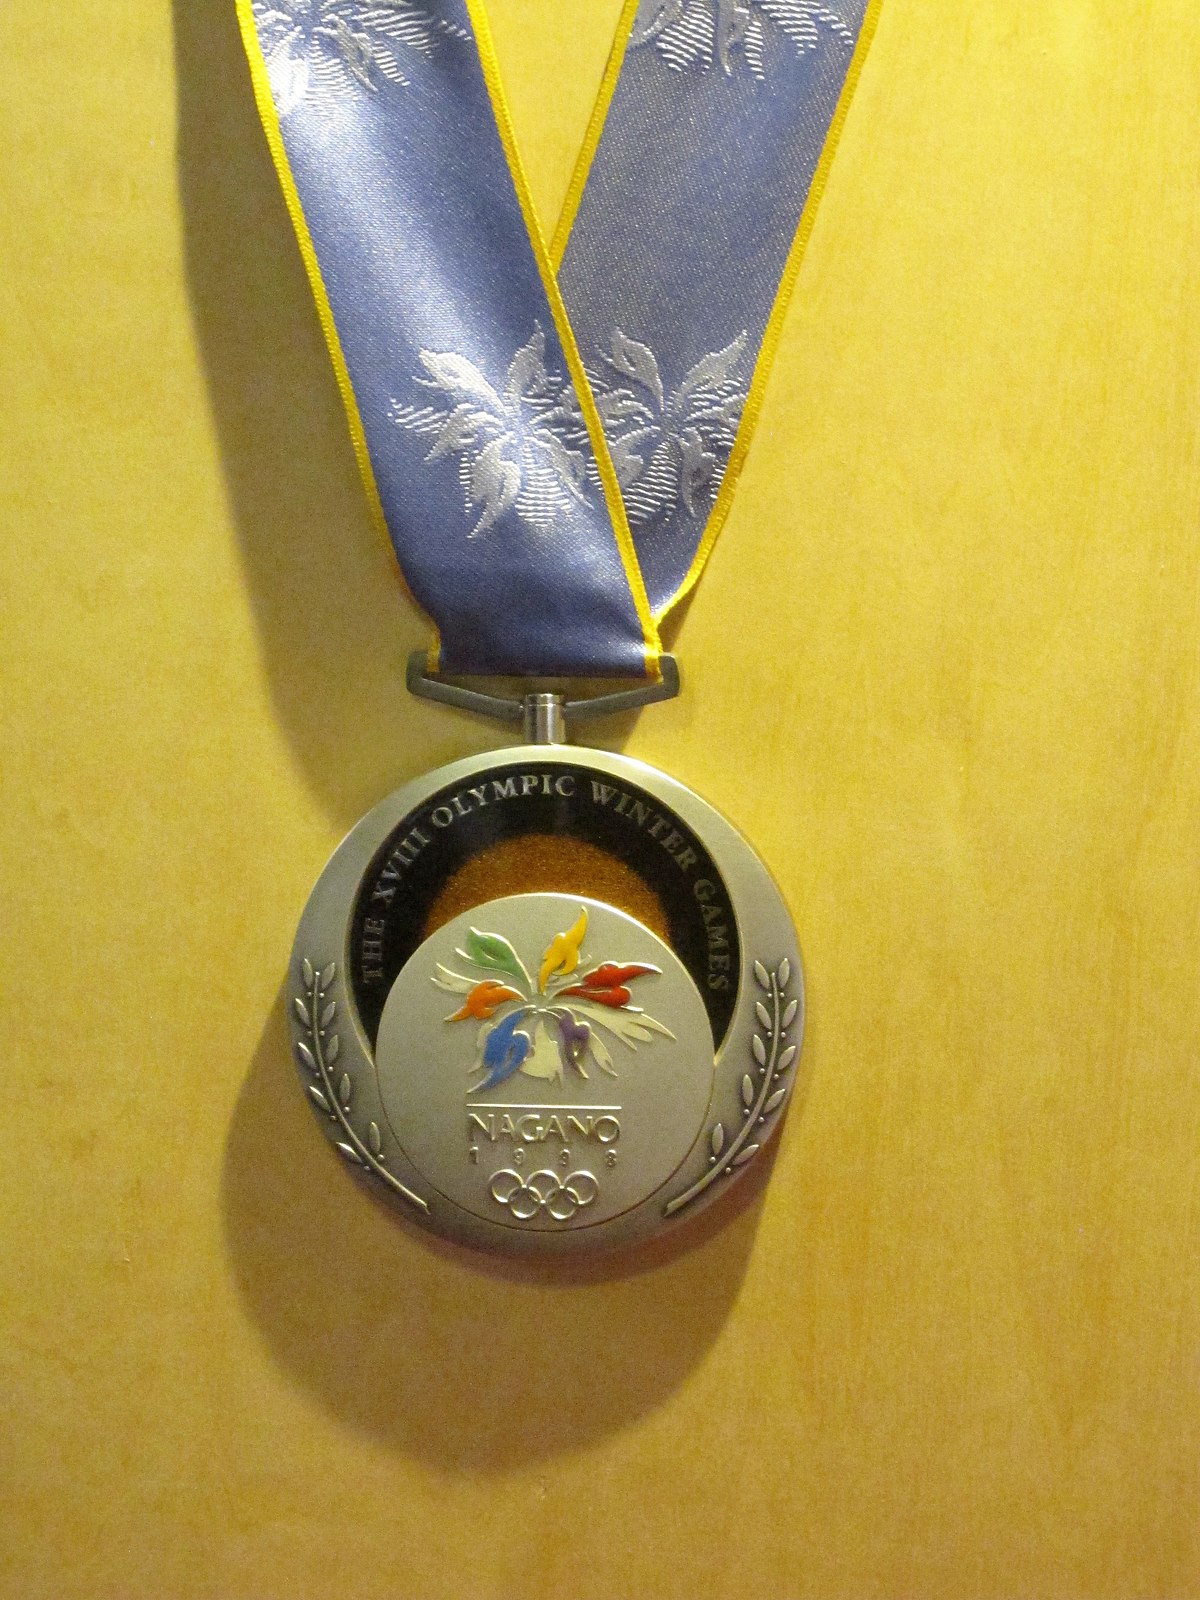 N.Sodbileg wins silver medal at world championship